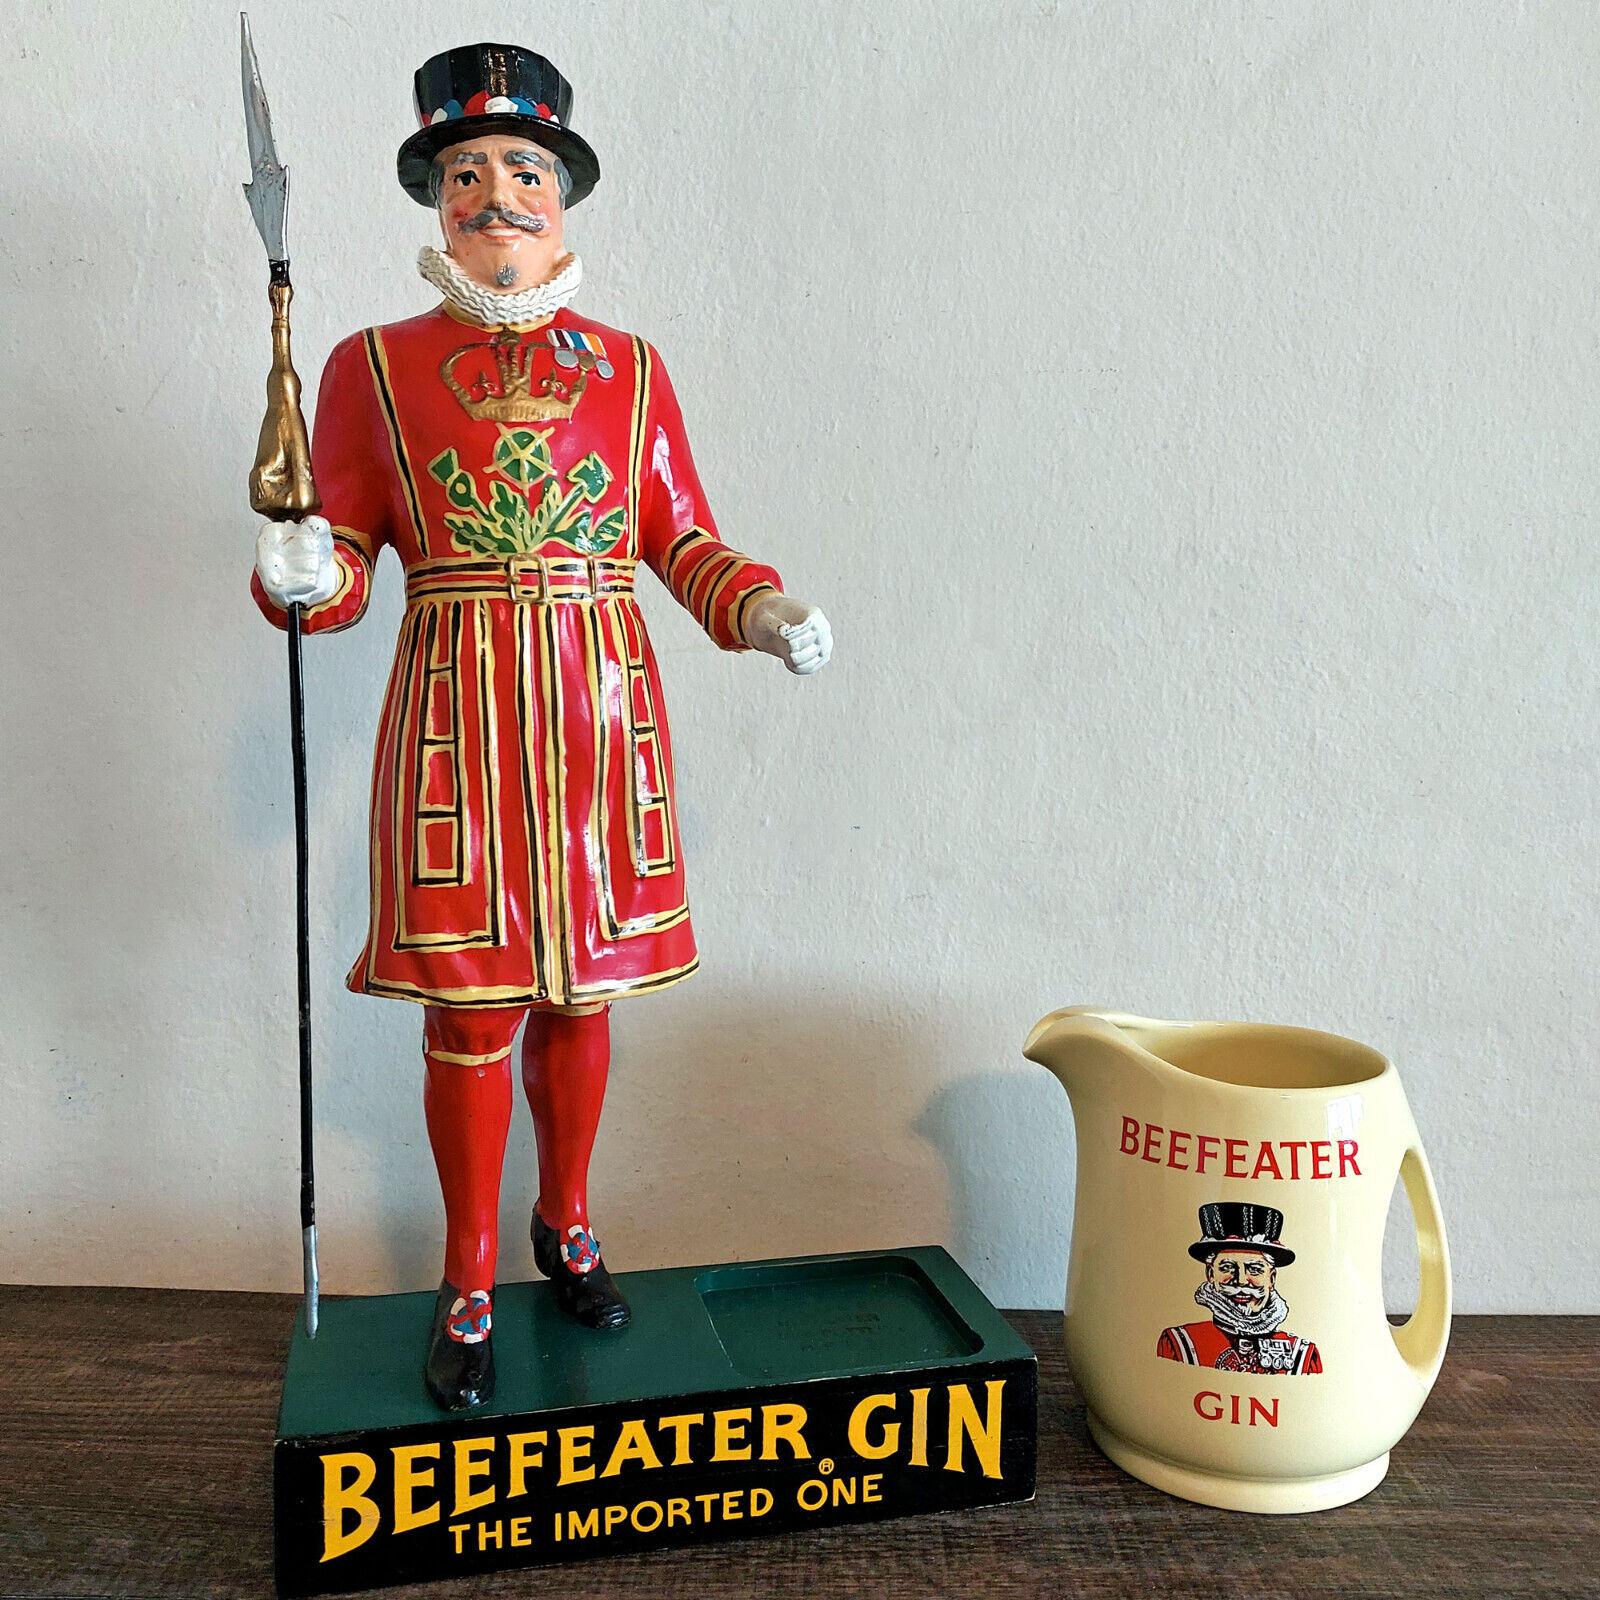 Vintage Beefeater Gin Bottle Display & Ceramic Pitcher- yeoman warder London UK